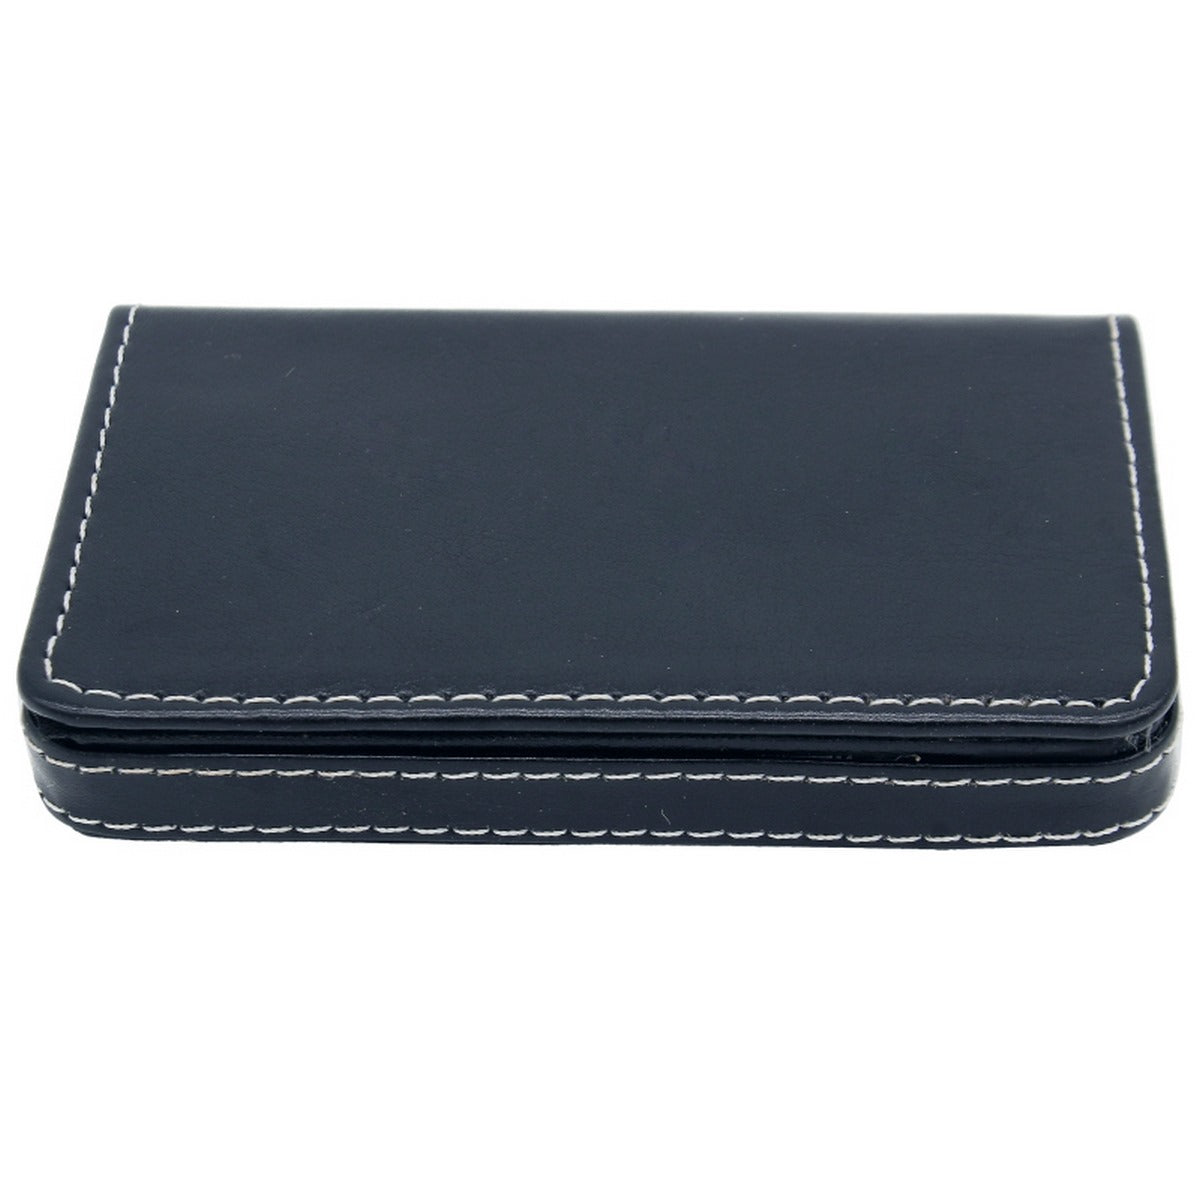 jags-mumbai Card Holder Leather Card Holder Black